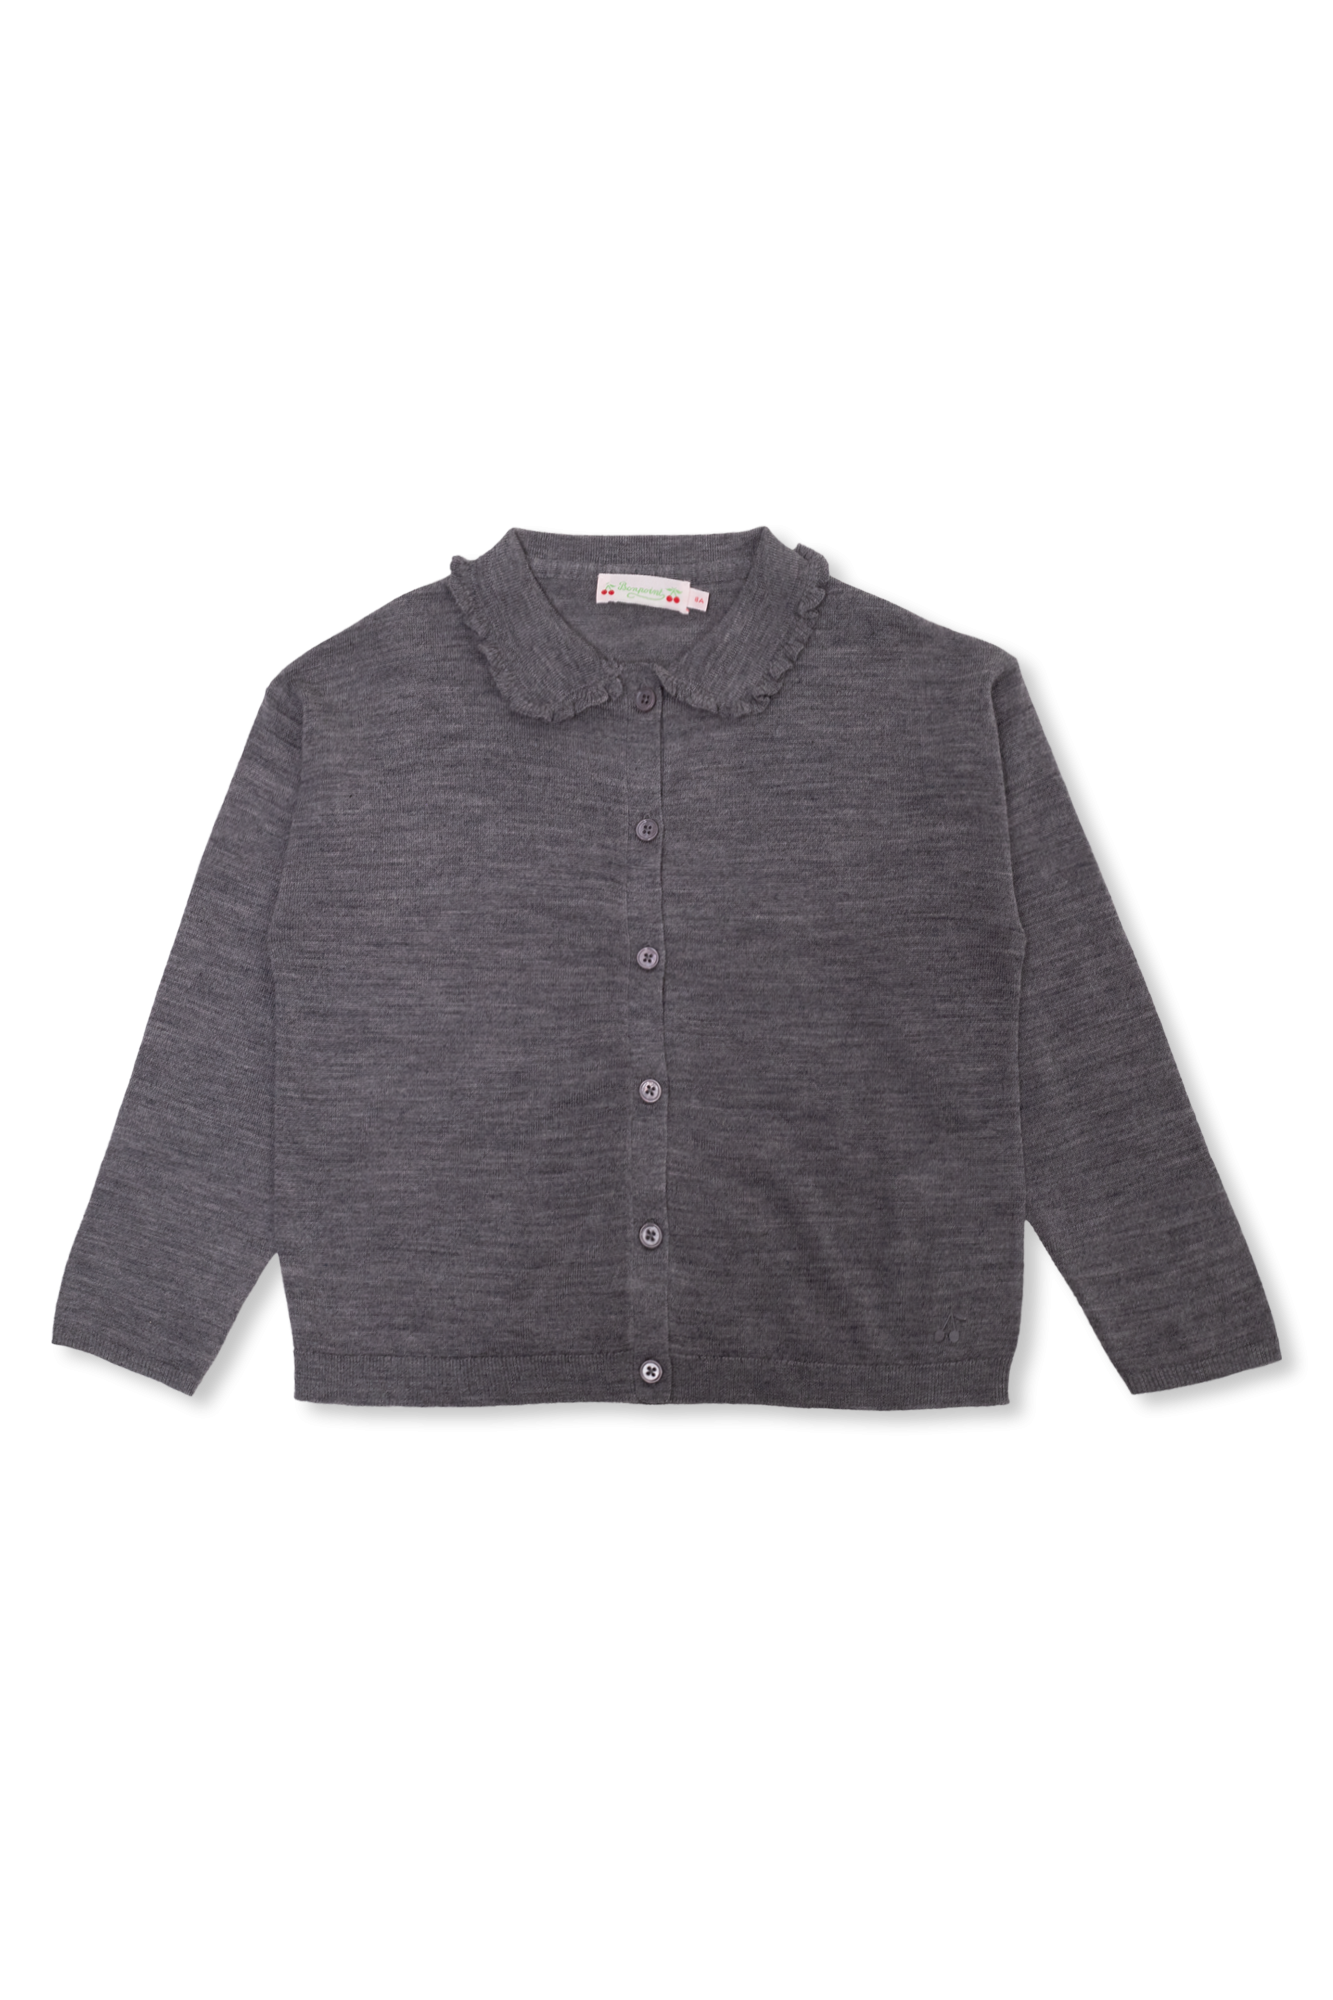 Girls' Piazza Italia Sweatshirt, size 134 - 140 (Grey)